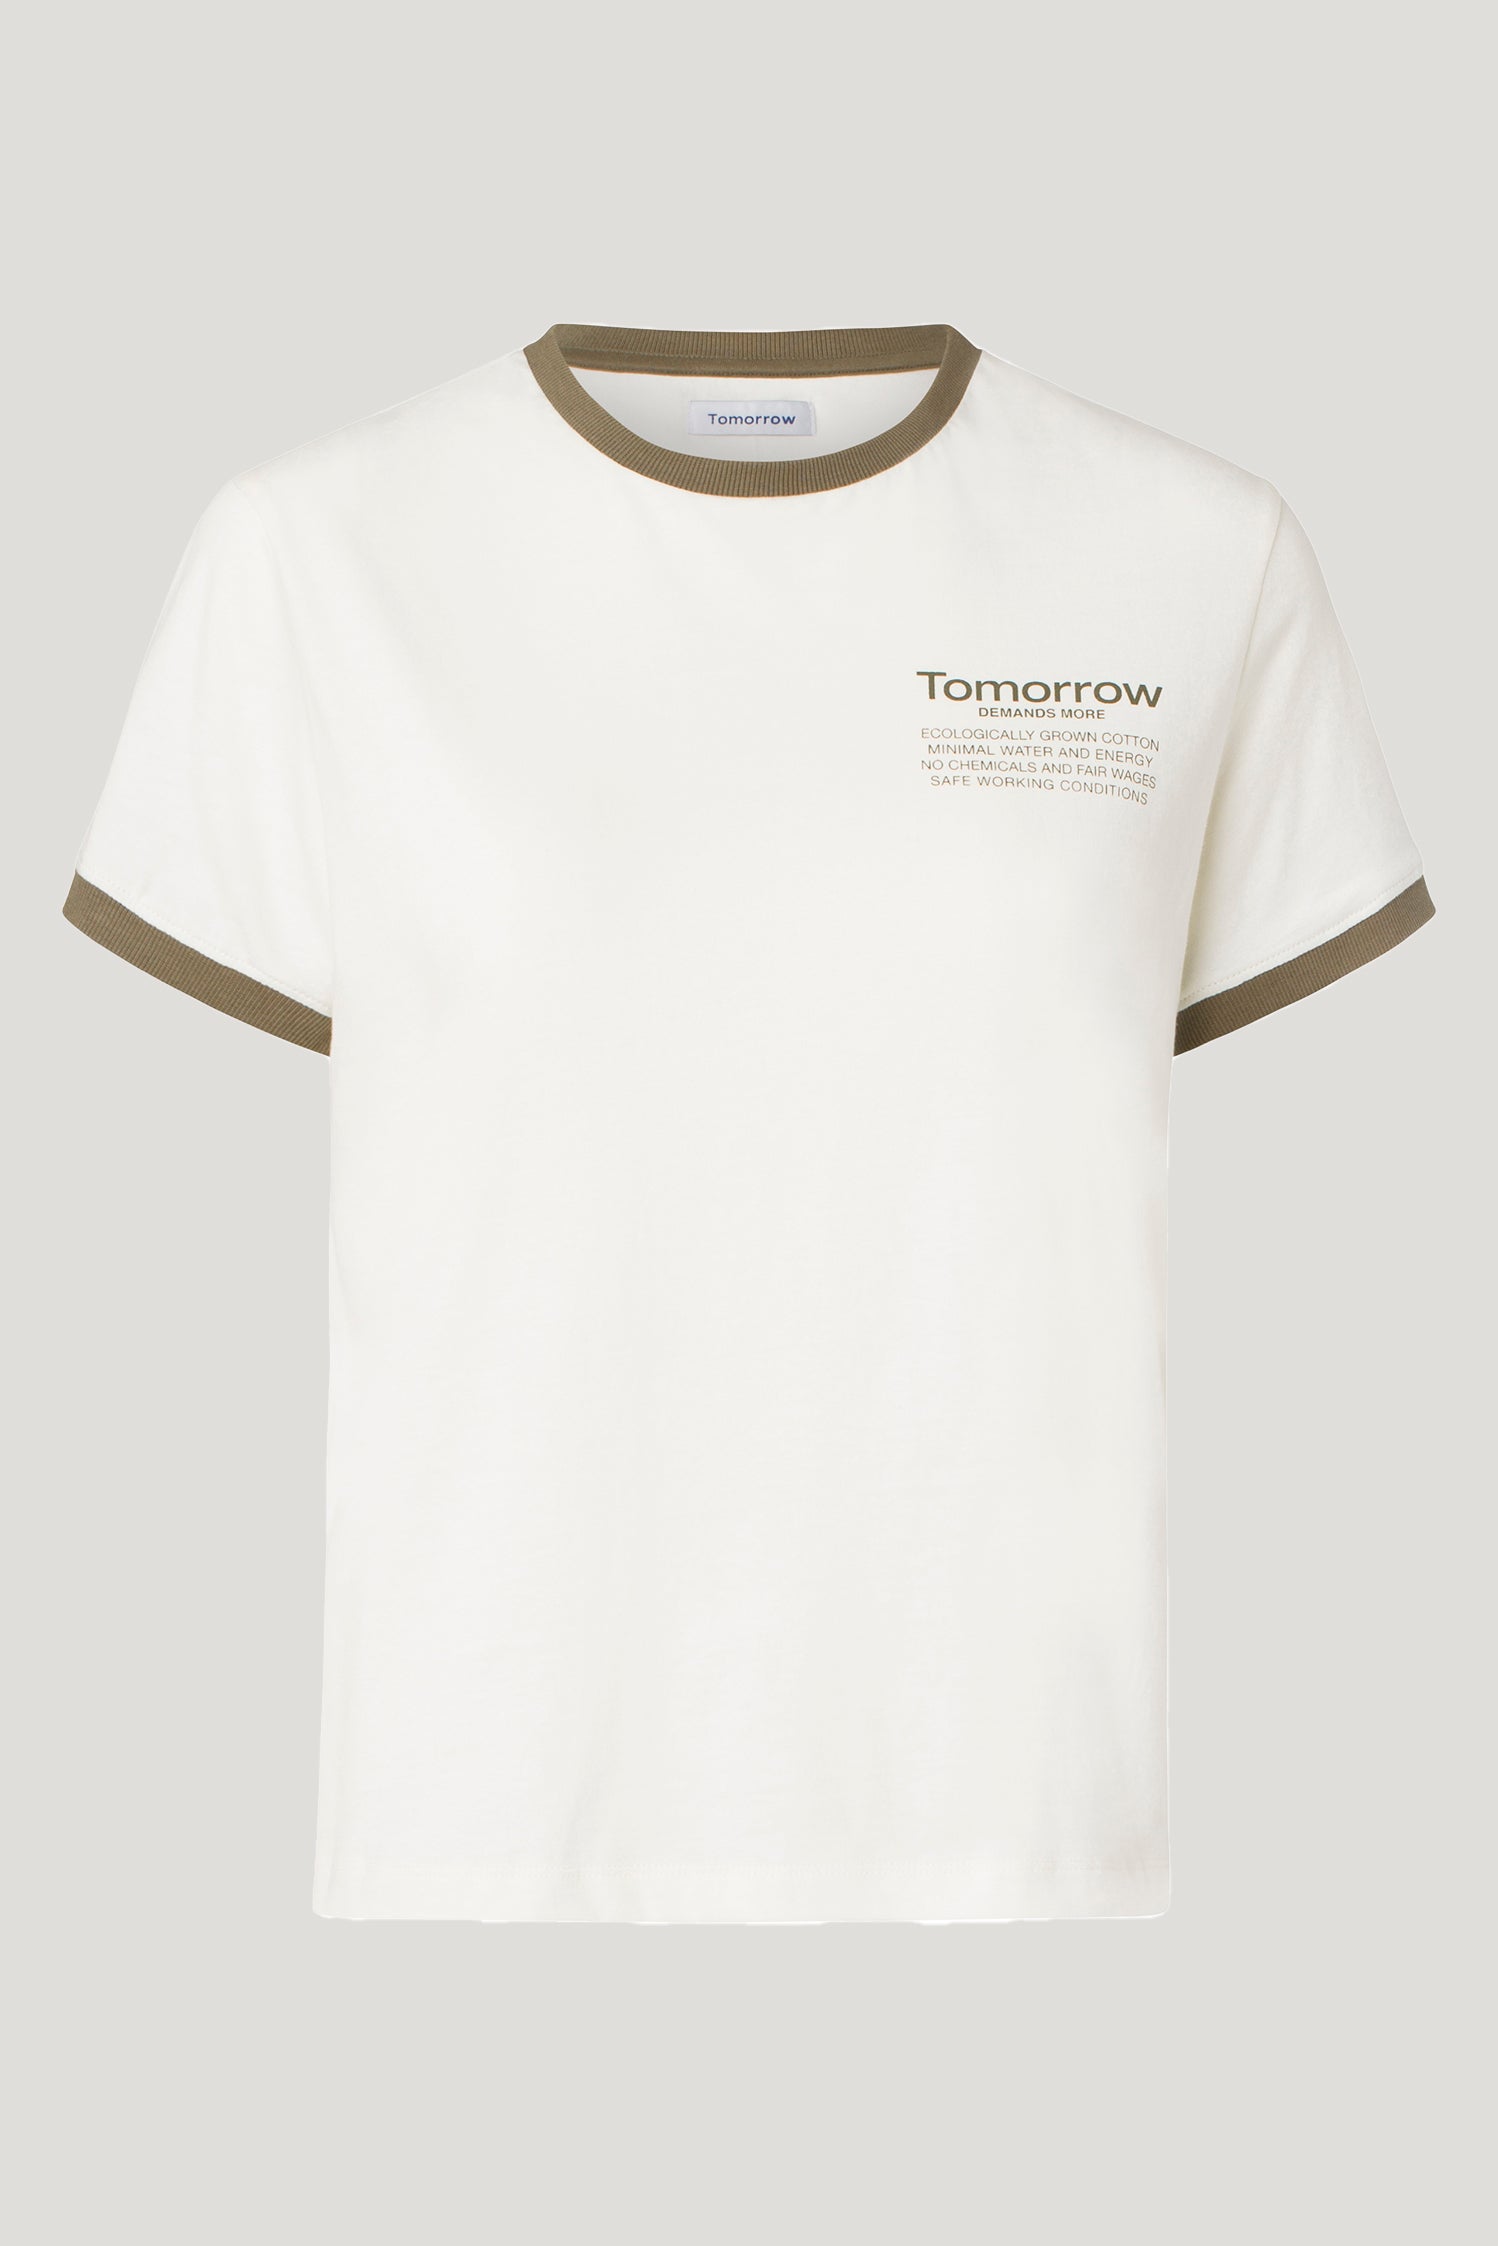 Tomorrow TD Tomorrow Retro Tee Tops & T-shirts Woodchip Brown